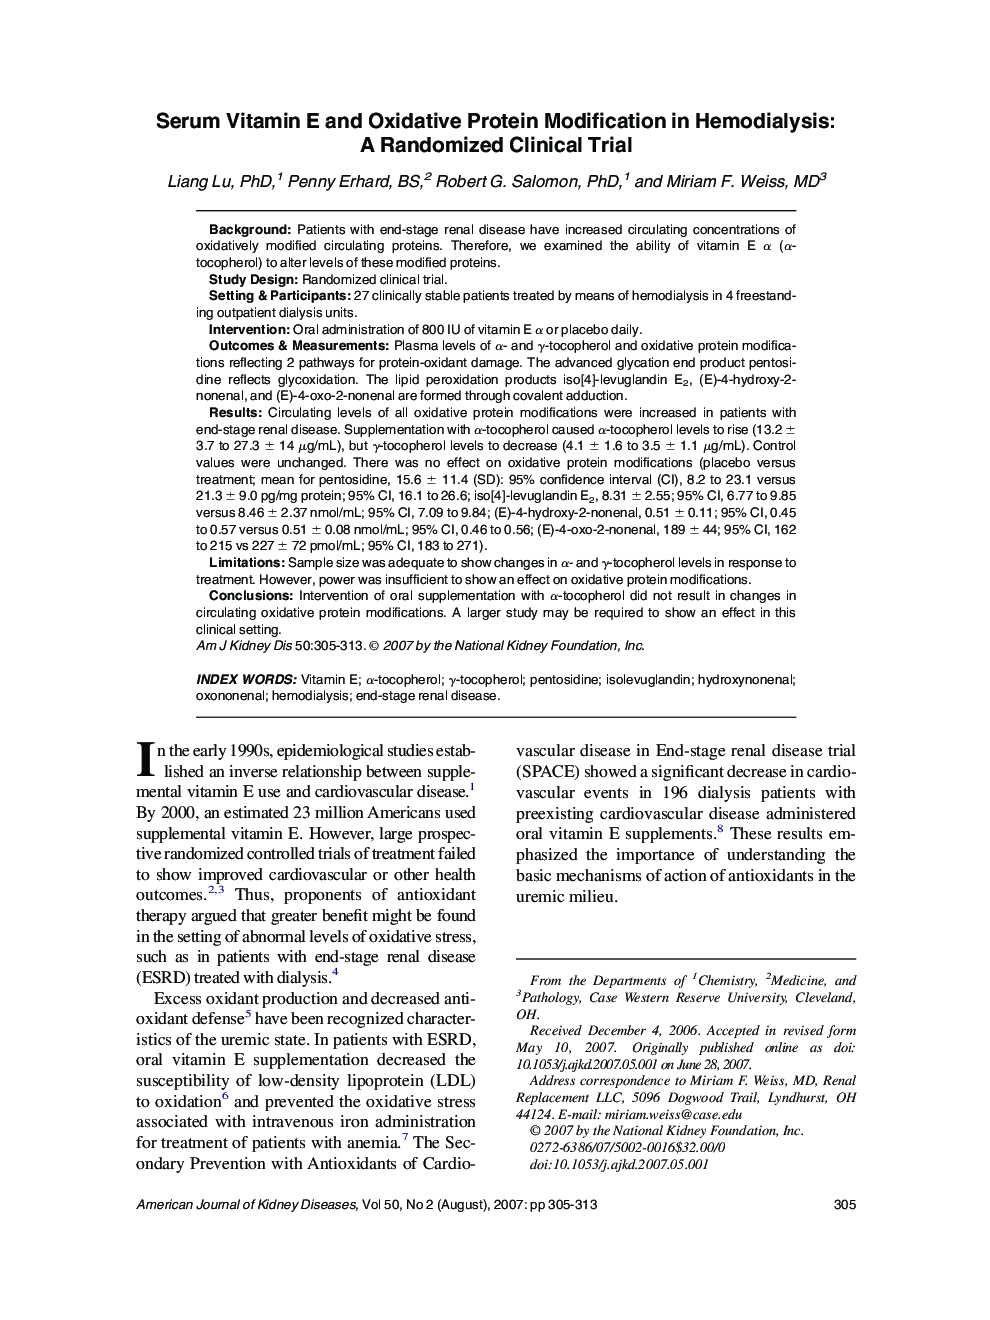 Serum Vitamin E and Oxidative Protein Modification in Hemodialysis: A Randomized Clinical Trial